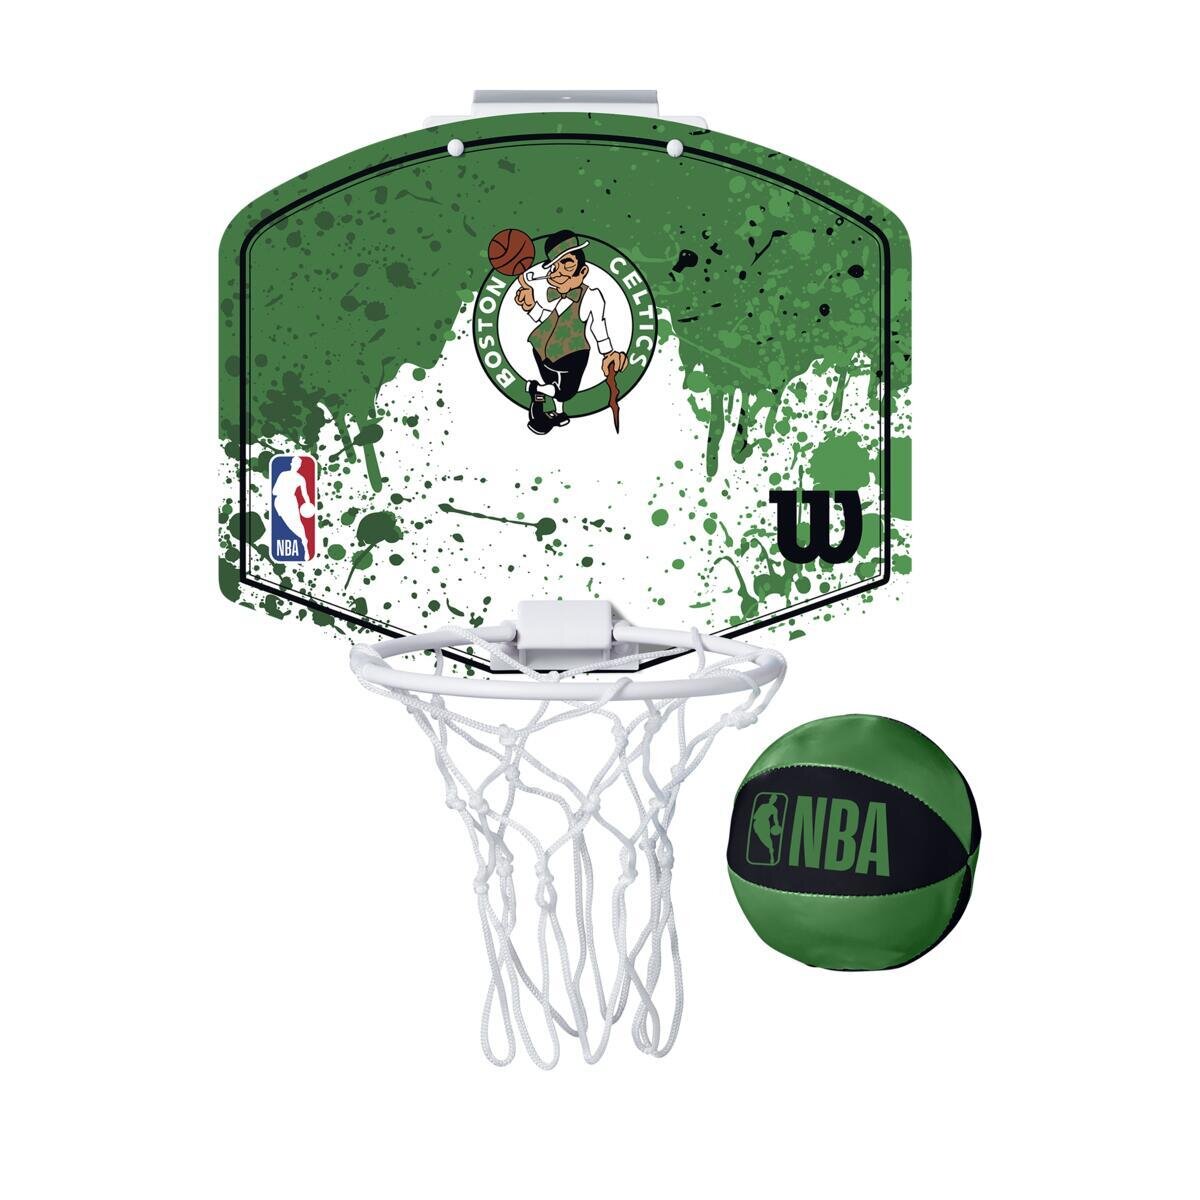 Wilson NBA Mini Hoop Basketball Backboard Game - Buy Online - Ph:  1800-370-766 - AfterPay & ZipPay Available!